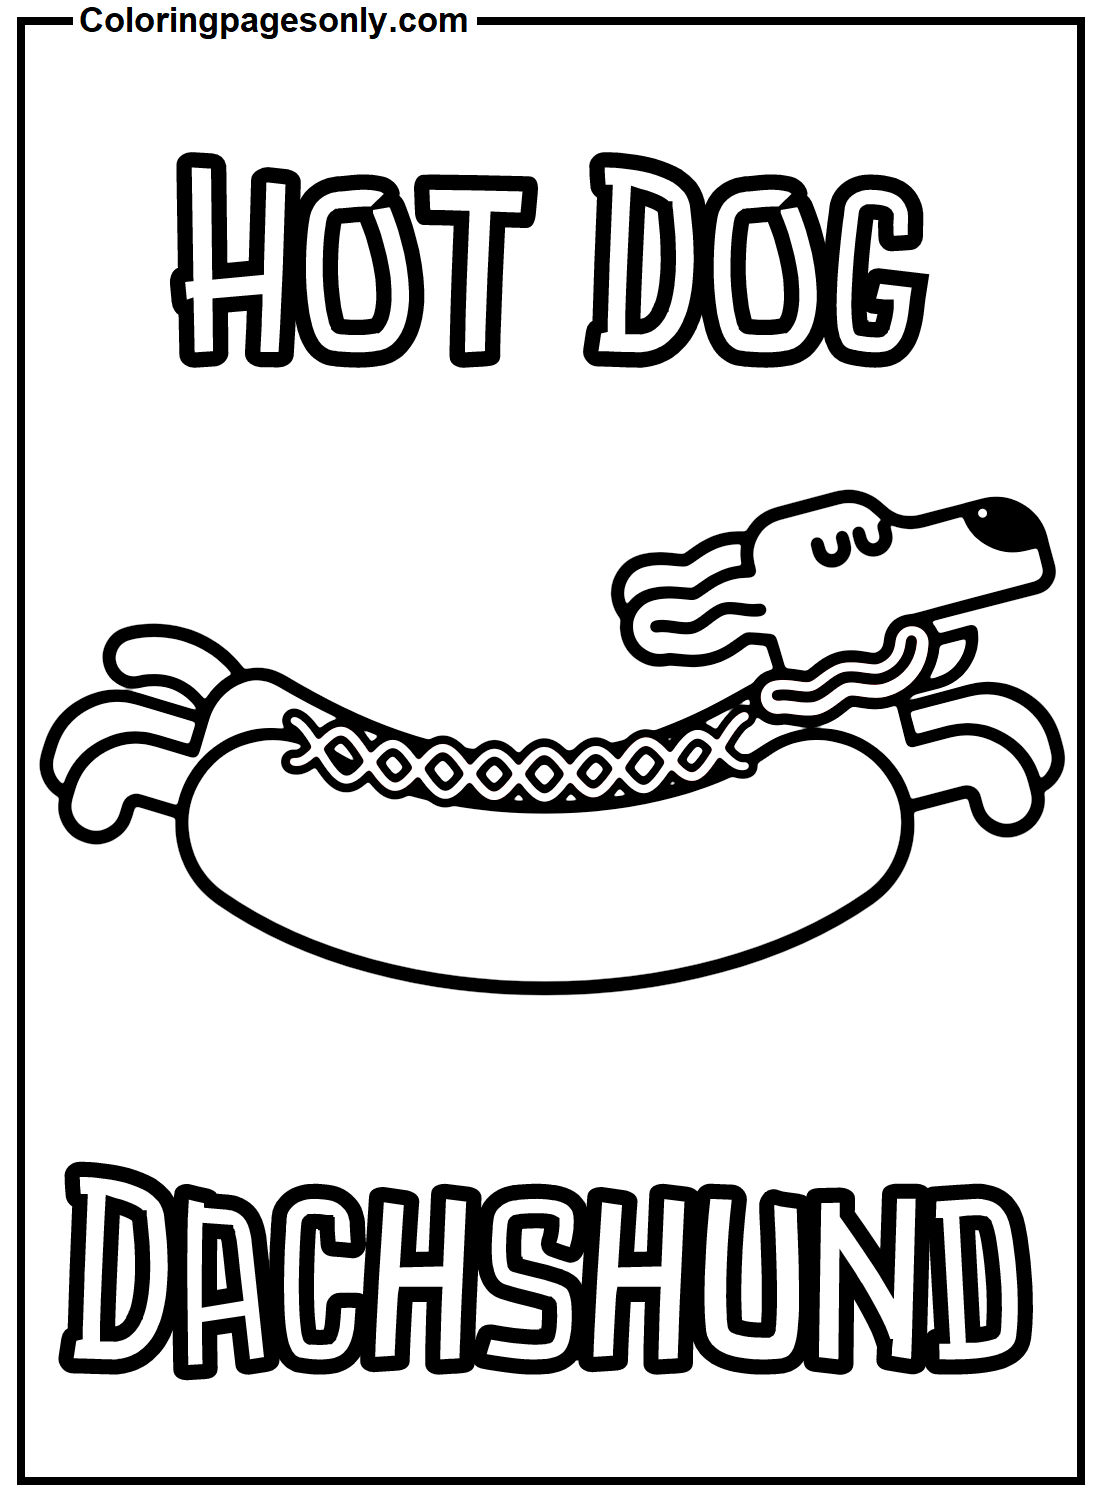 Teckel Hot Dog de Hot Dog